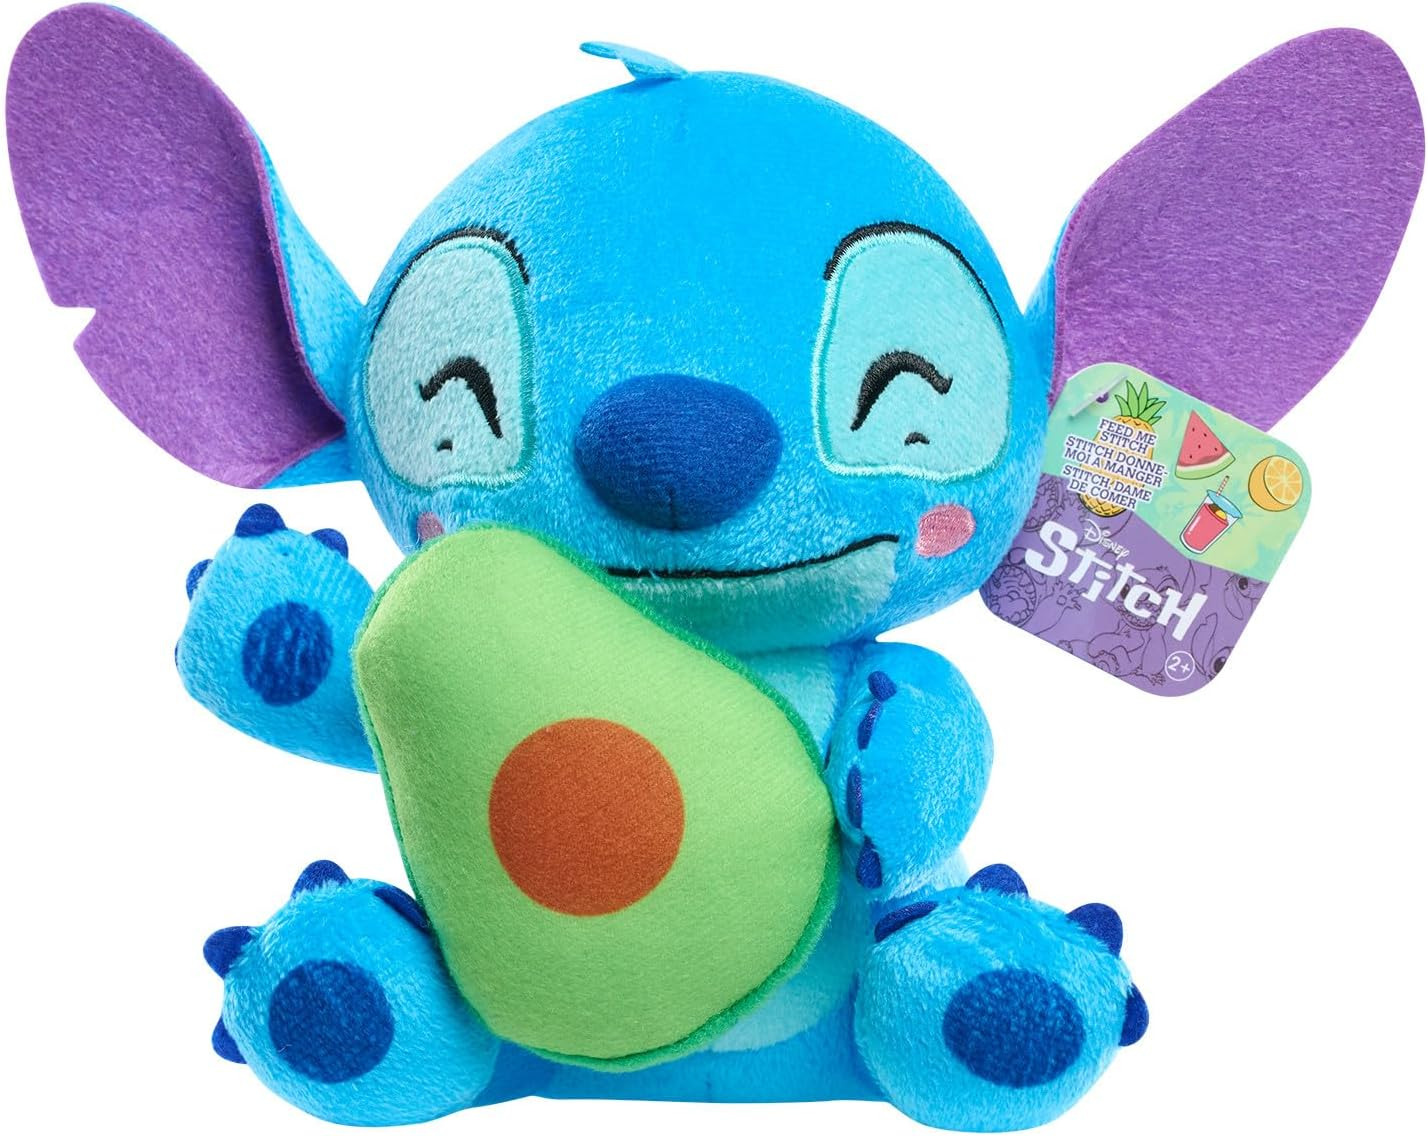 STITCH Disney Small 7-Inch Plush Stuffed Animal, Stitch with Avocado, Officially